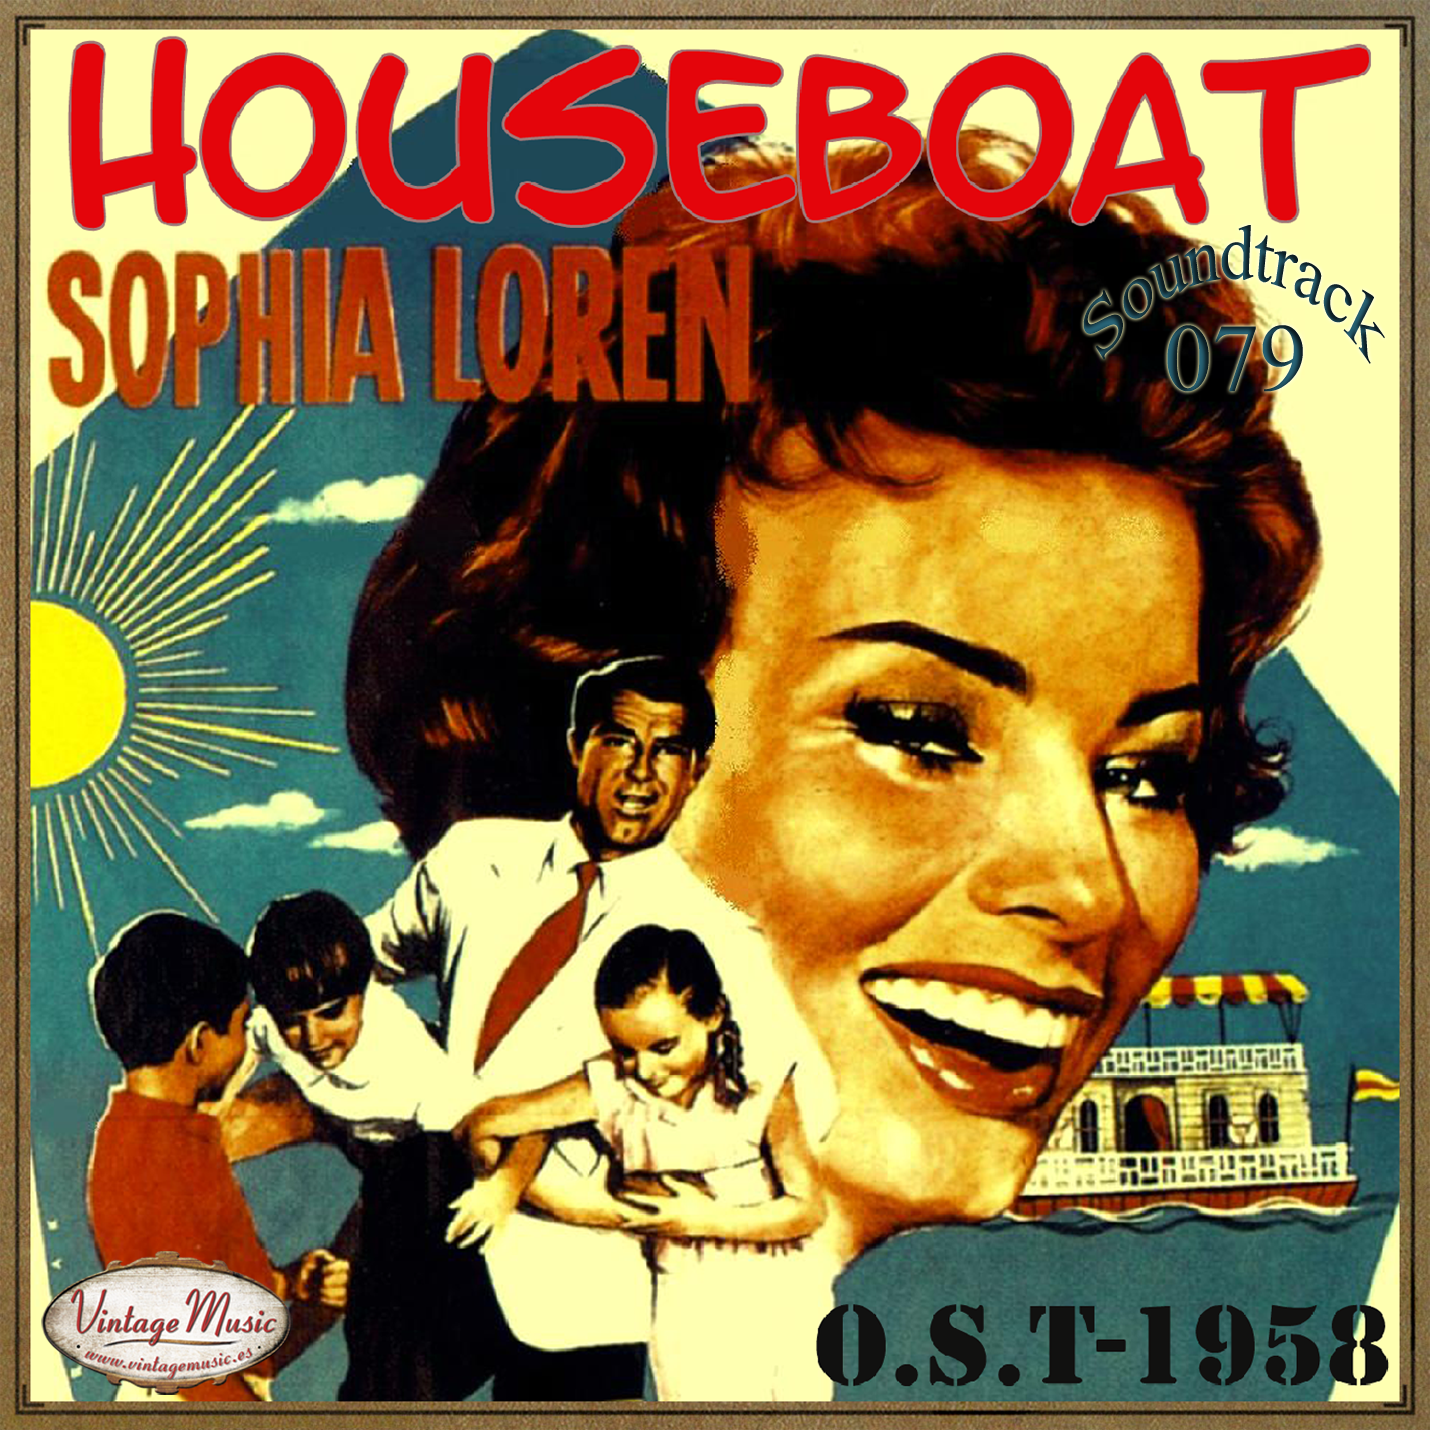 Houseboat (Colección Soundtrack - #79)